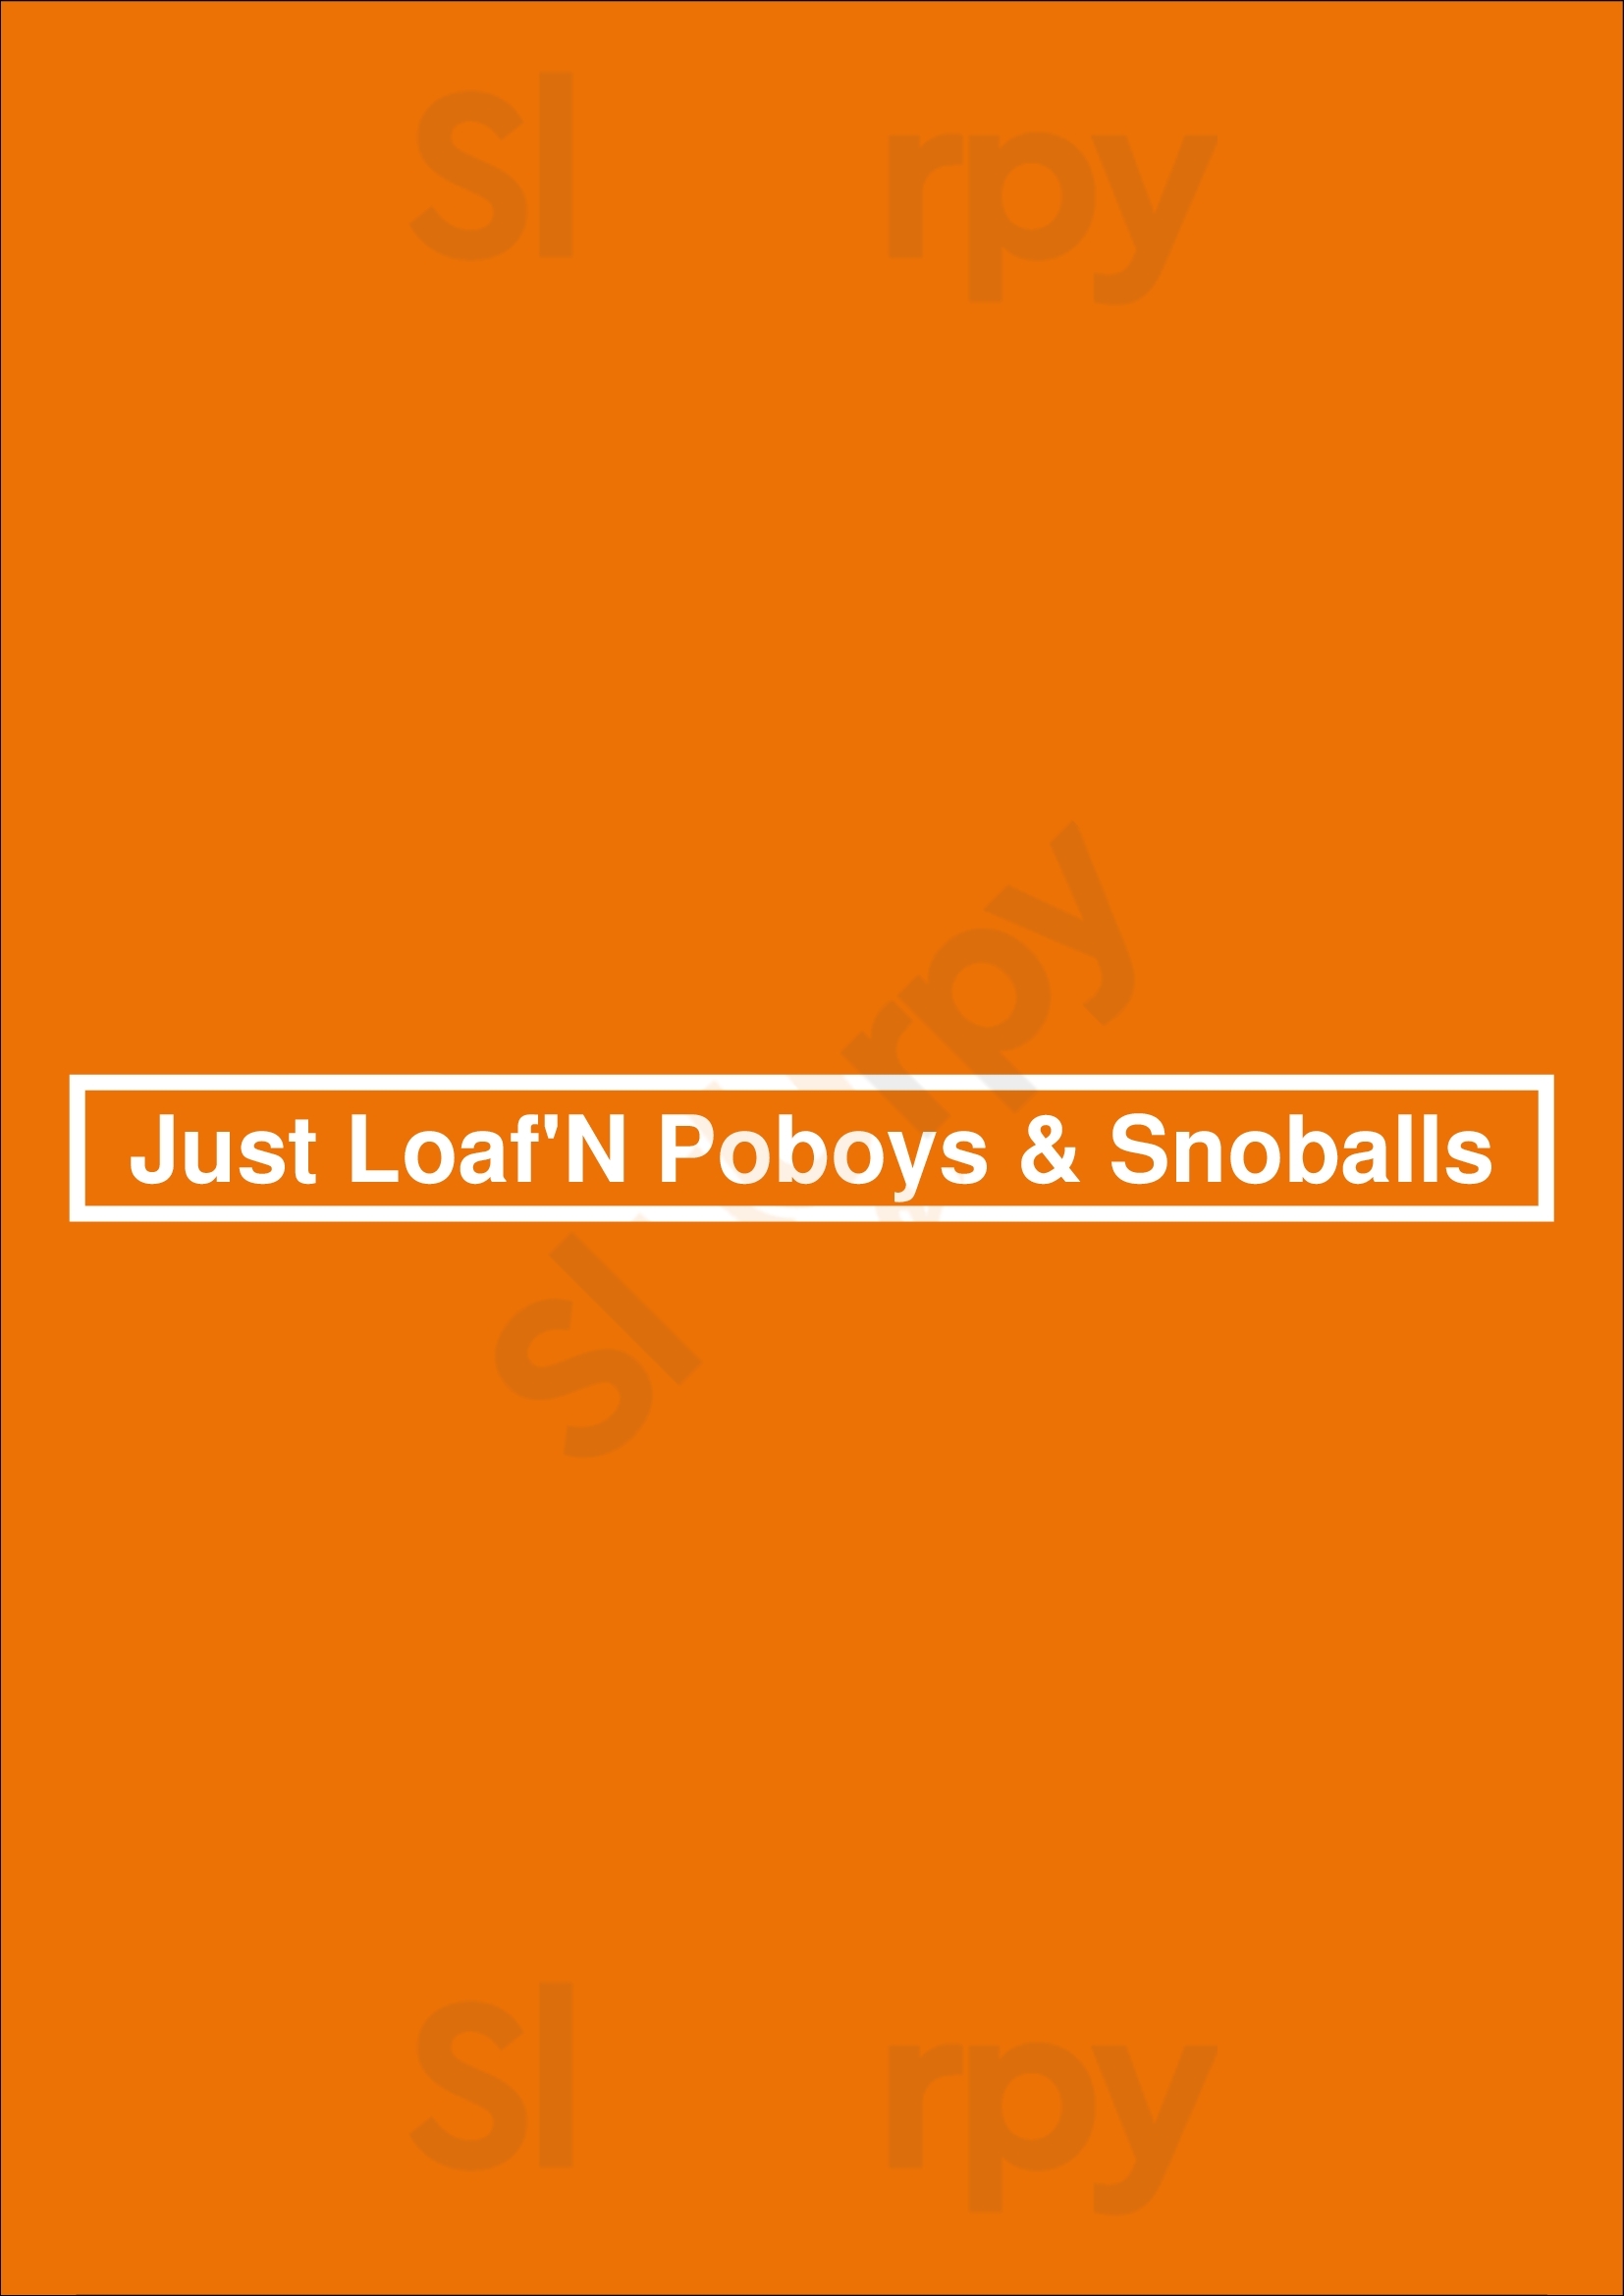 Just Loaf'n New Orleans Poboys & Snoballs Atlanta Menu - 1